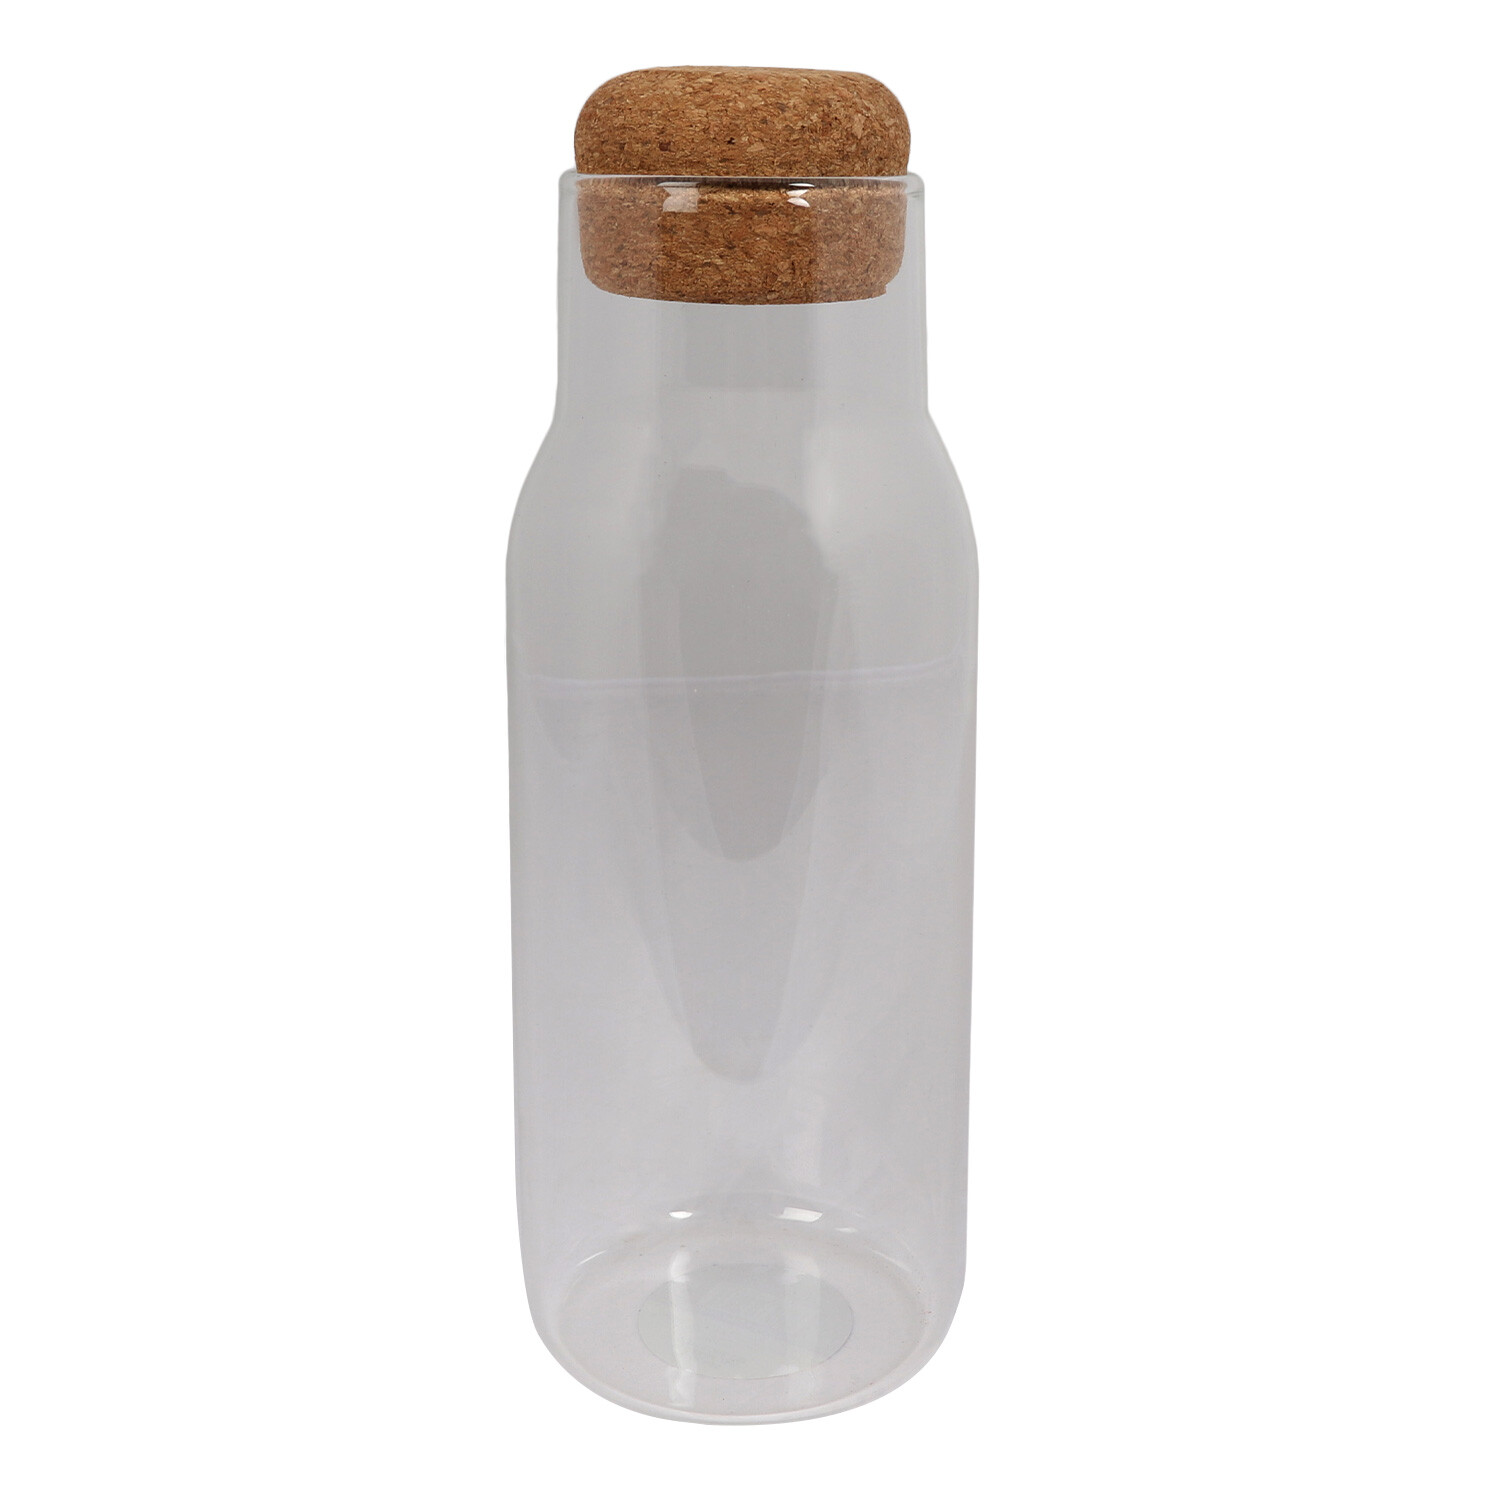 Storage Jar with Cork Lid - Clear / 1.1l Image 1